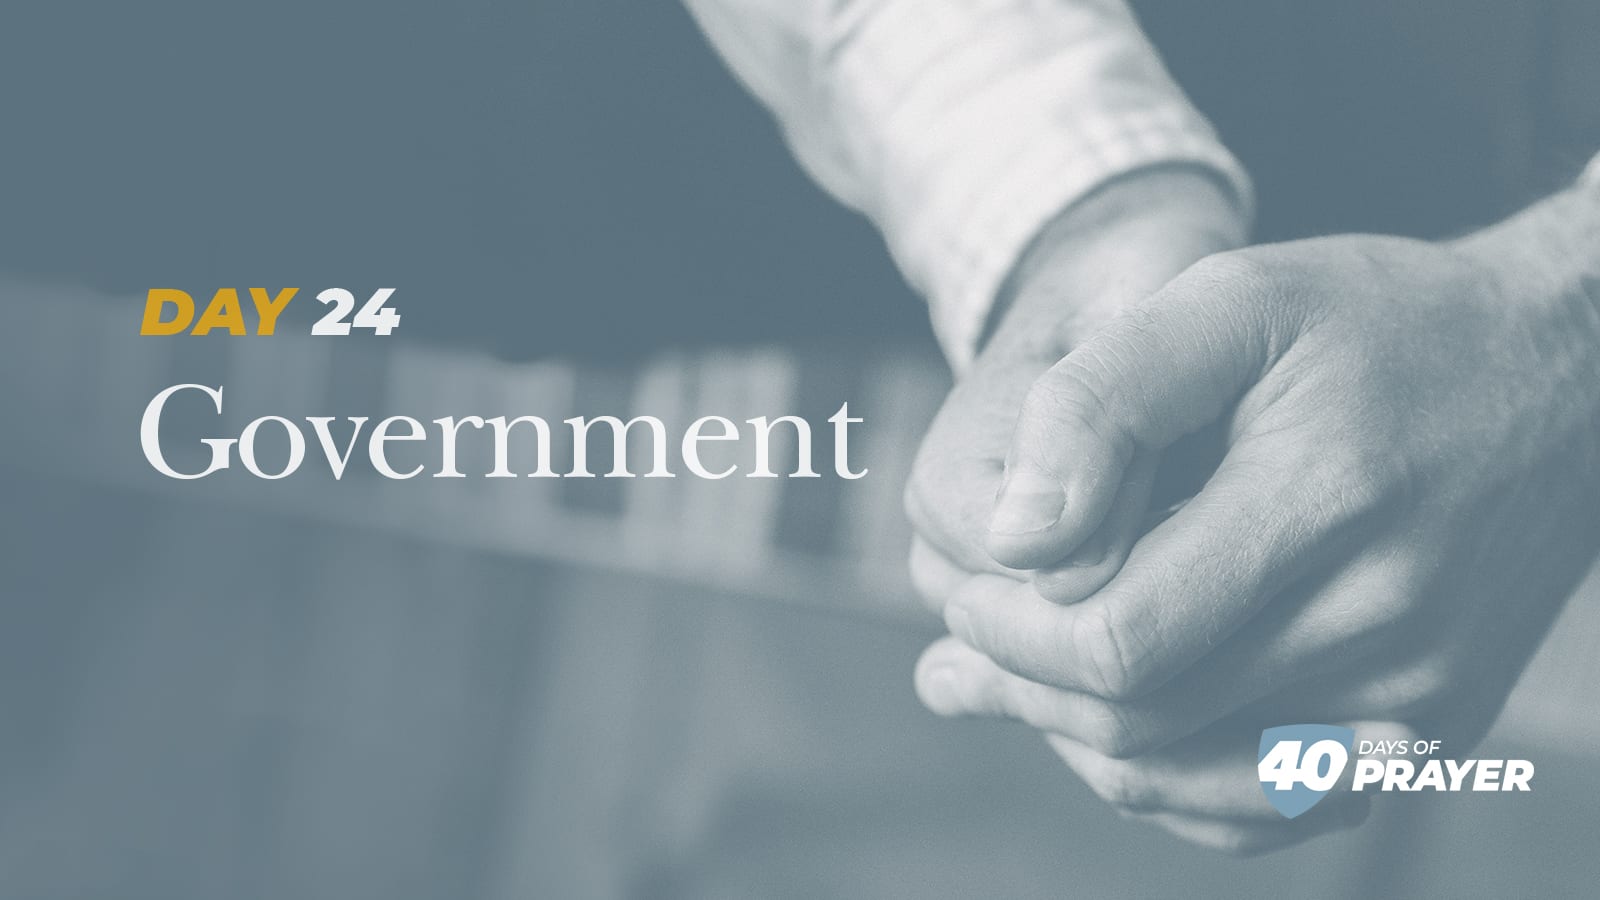 40 days of Prayer Day 24: Government